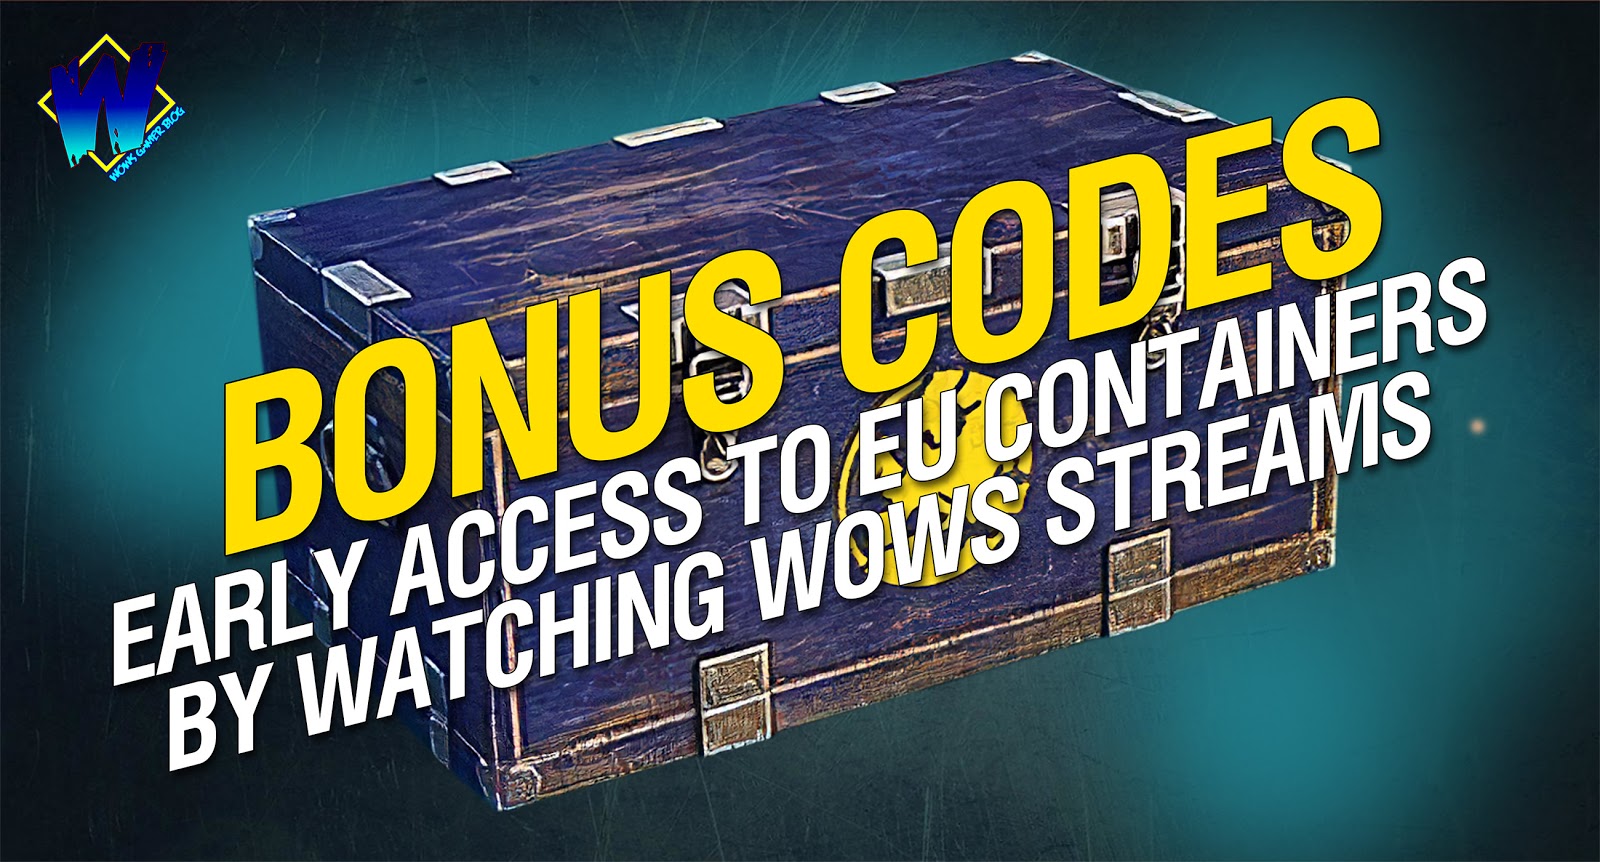 Pocketwin Bonus Codes